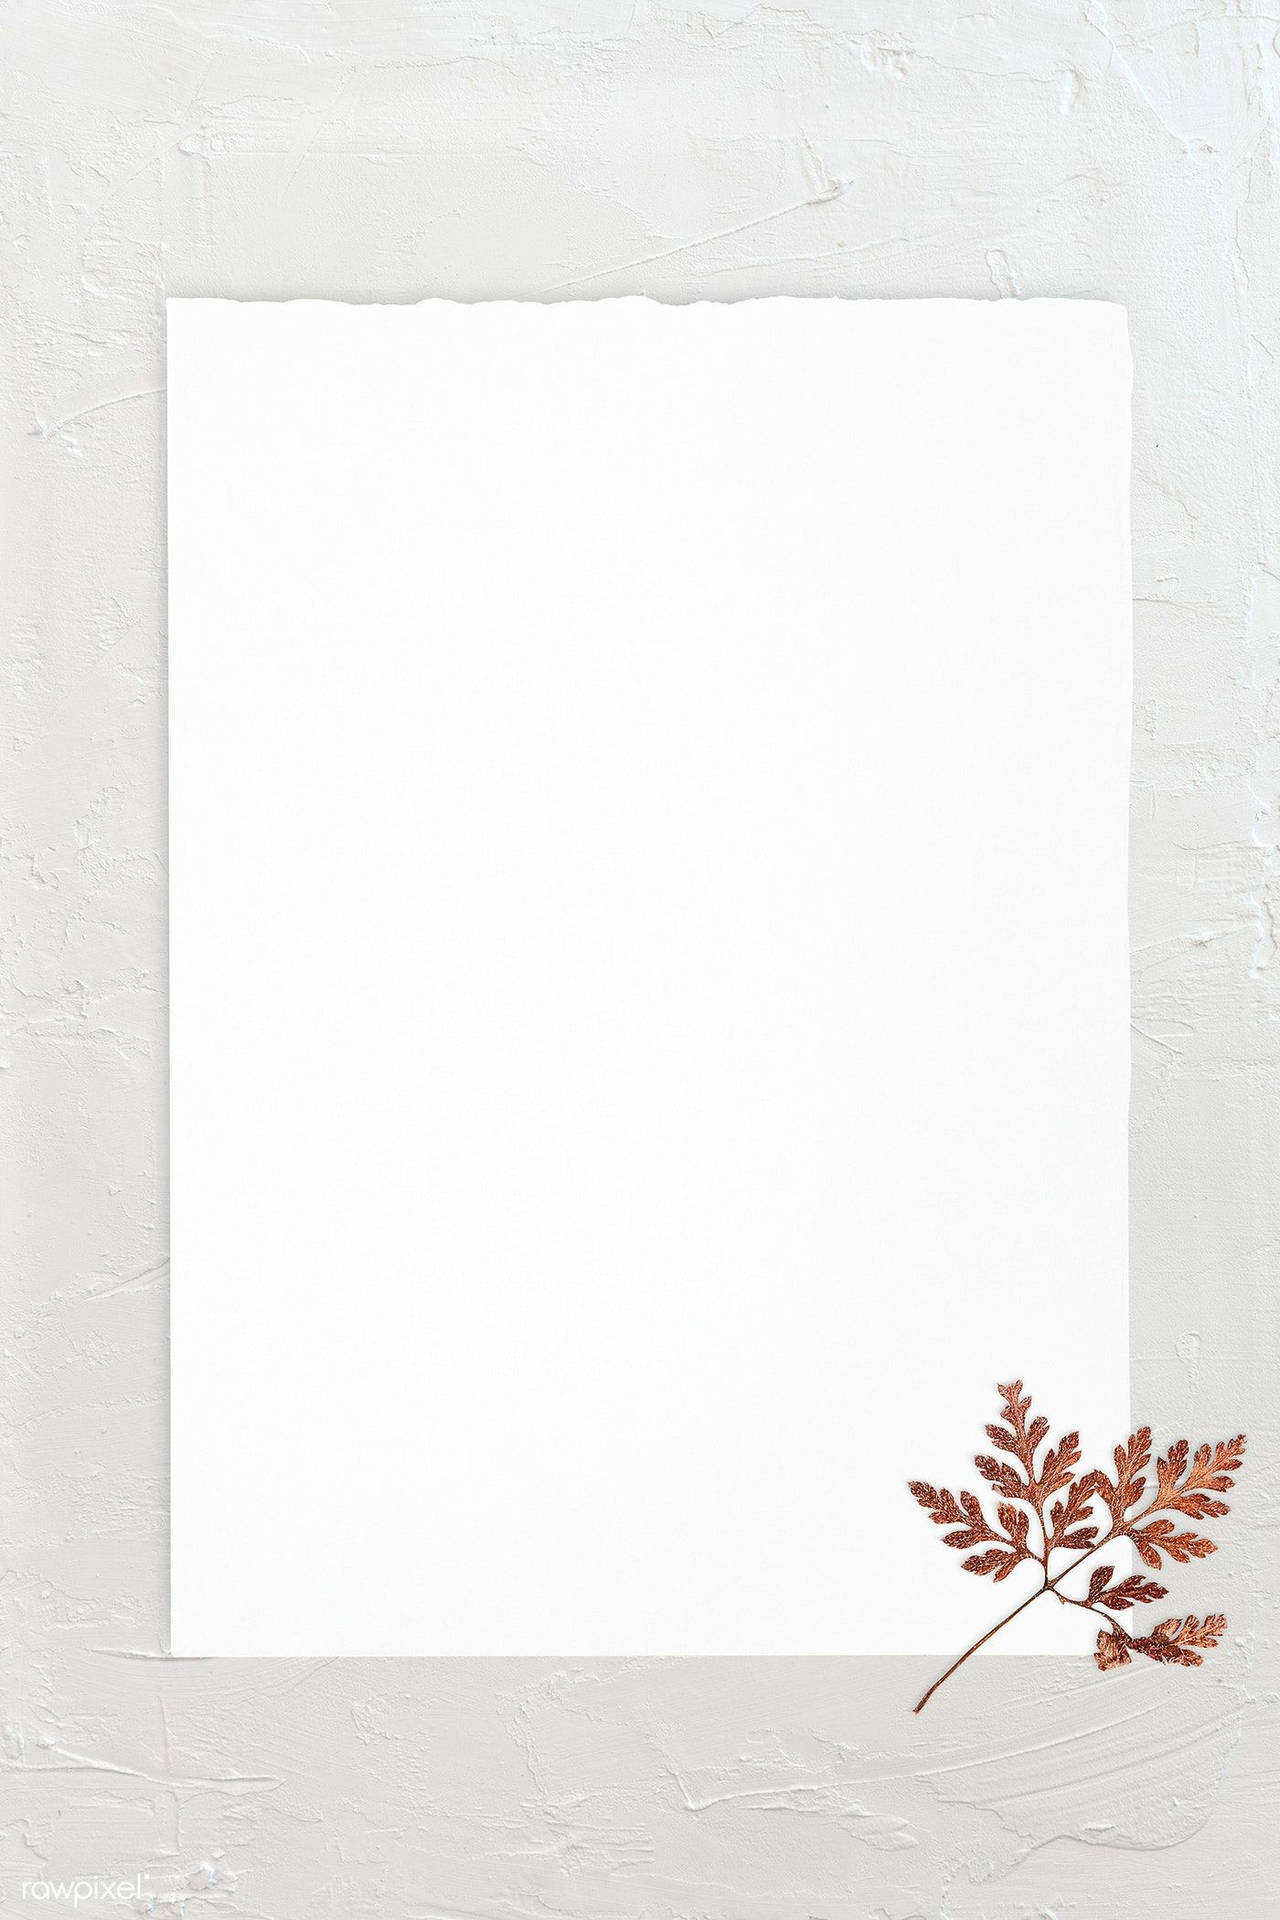 Premium Photo | Blank white paper texture background